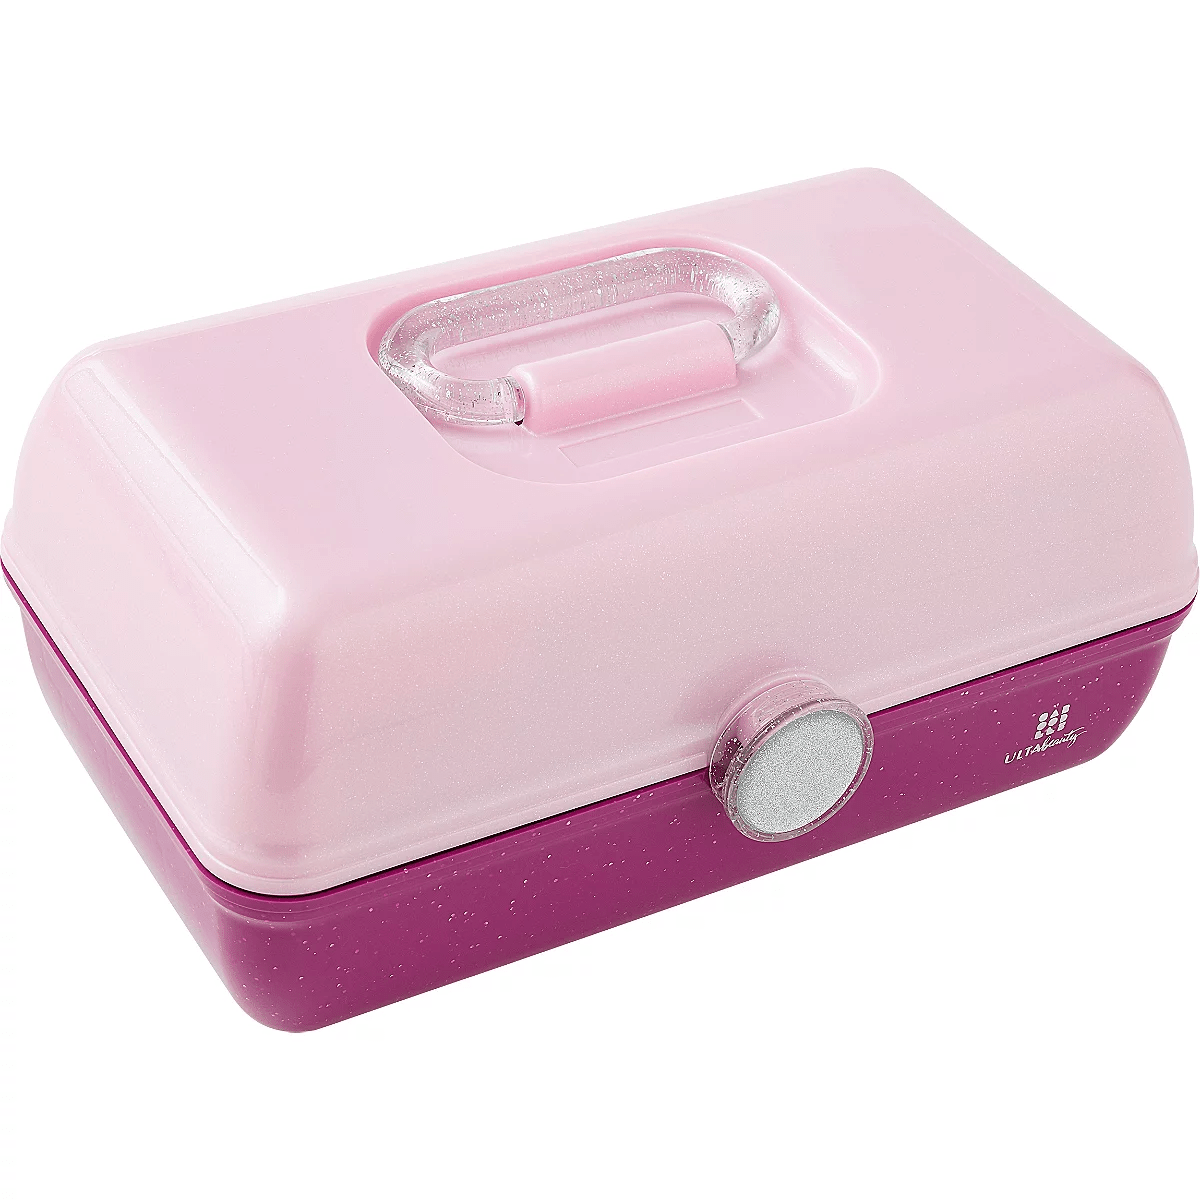  Ulta Beauty. Beauty Box: Caboodles Edition Pink. : Beauty &  Personal Care